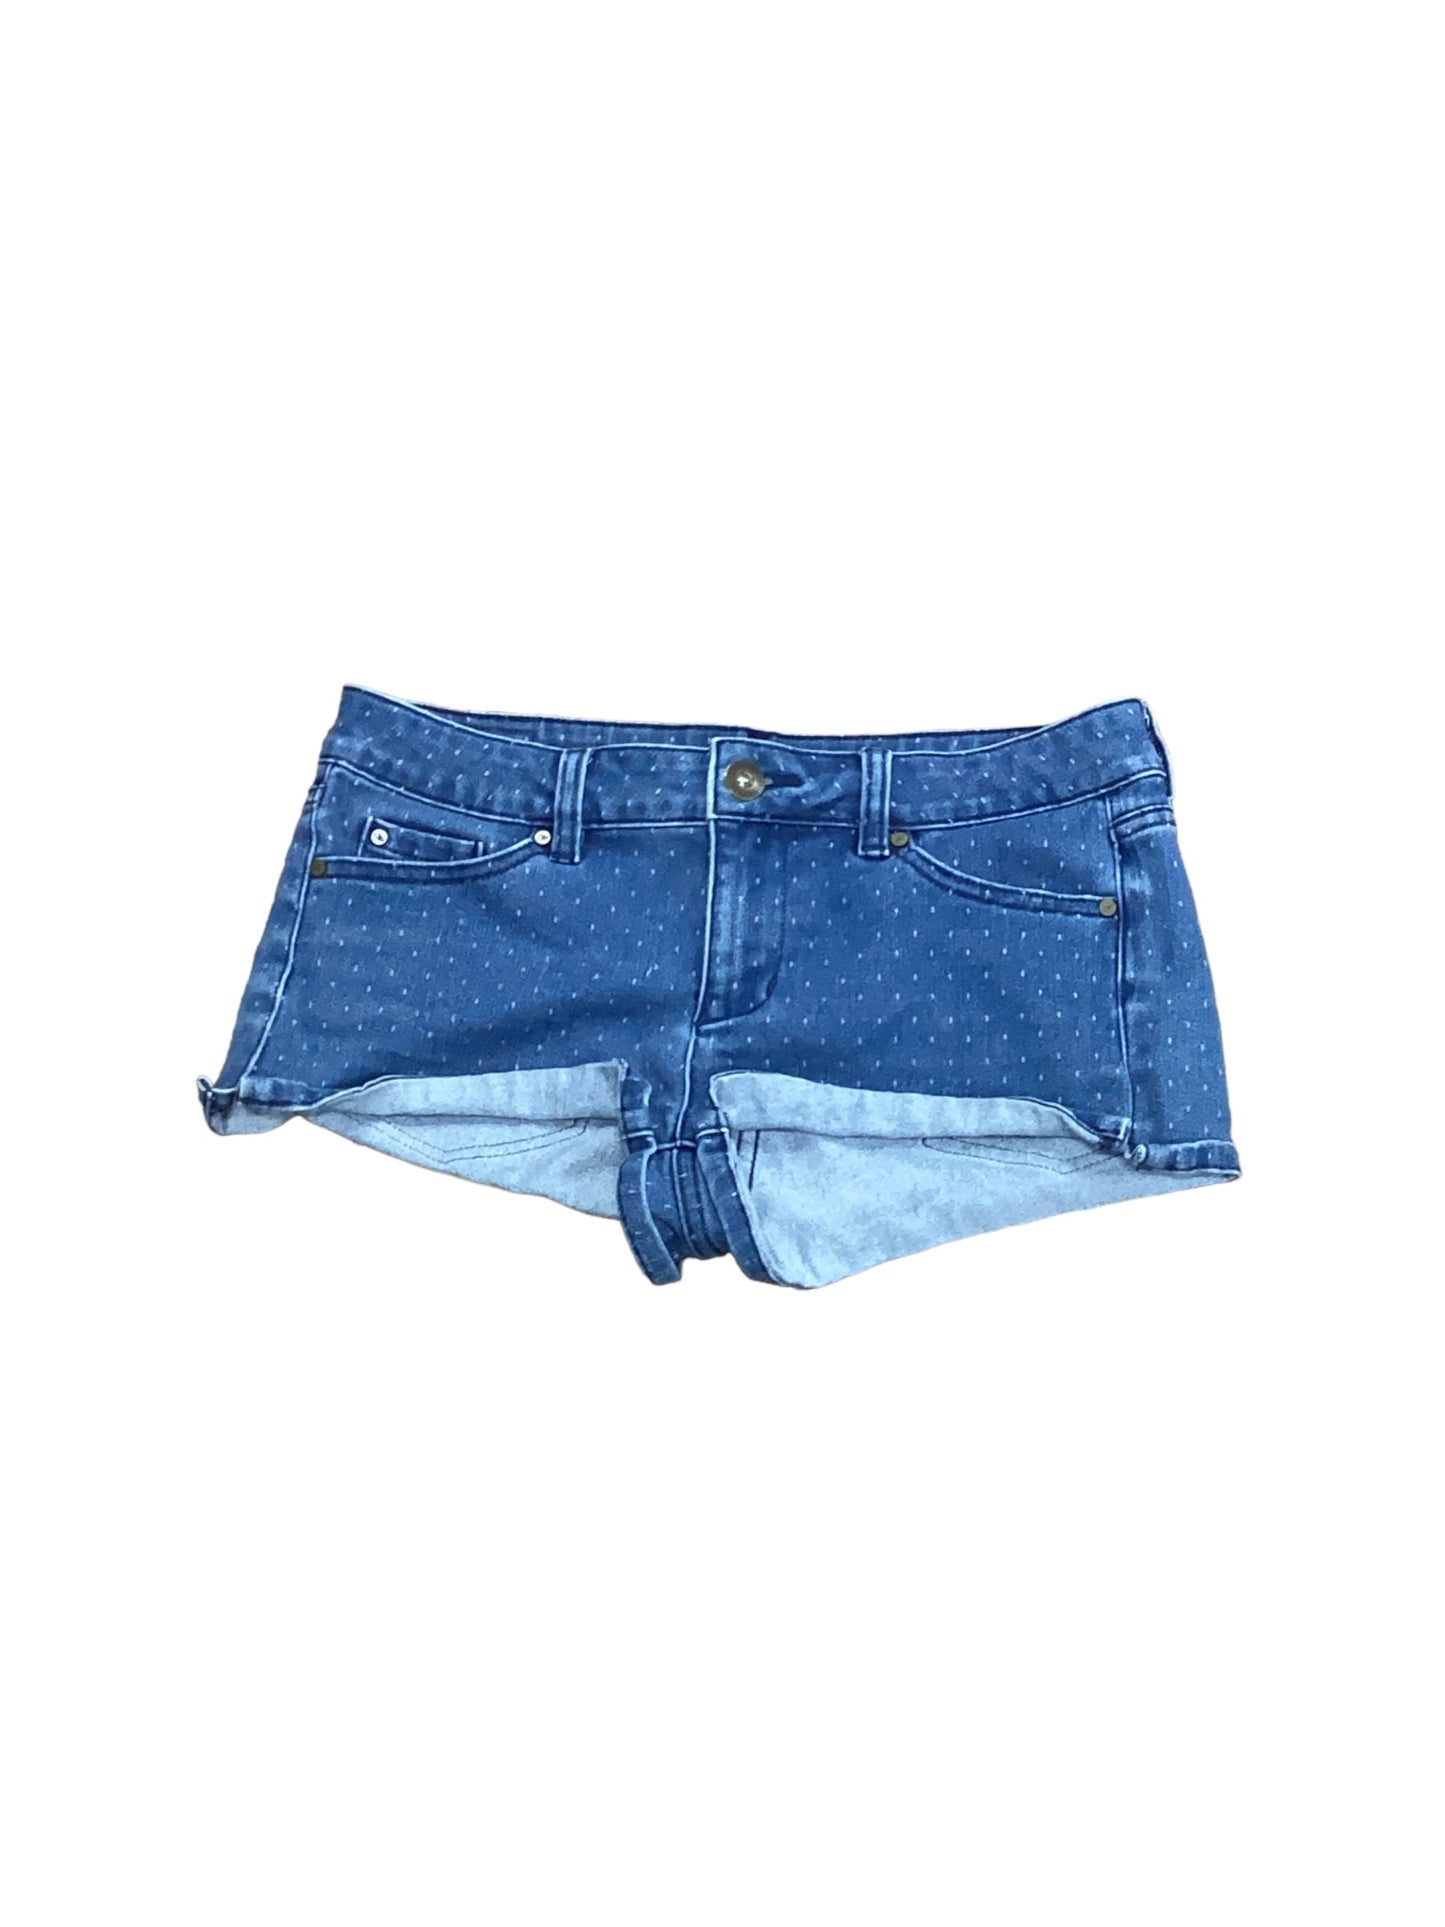 Blue Shorts Oneill, Size 11